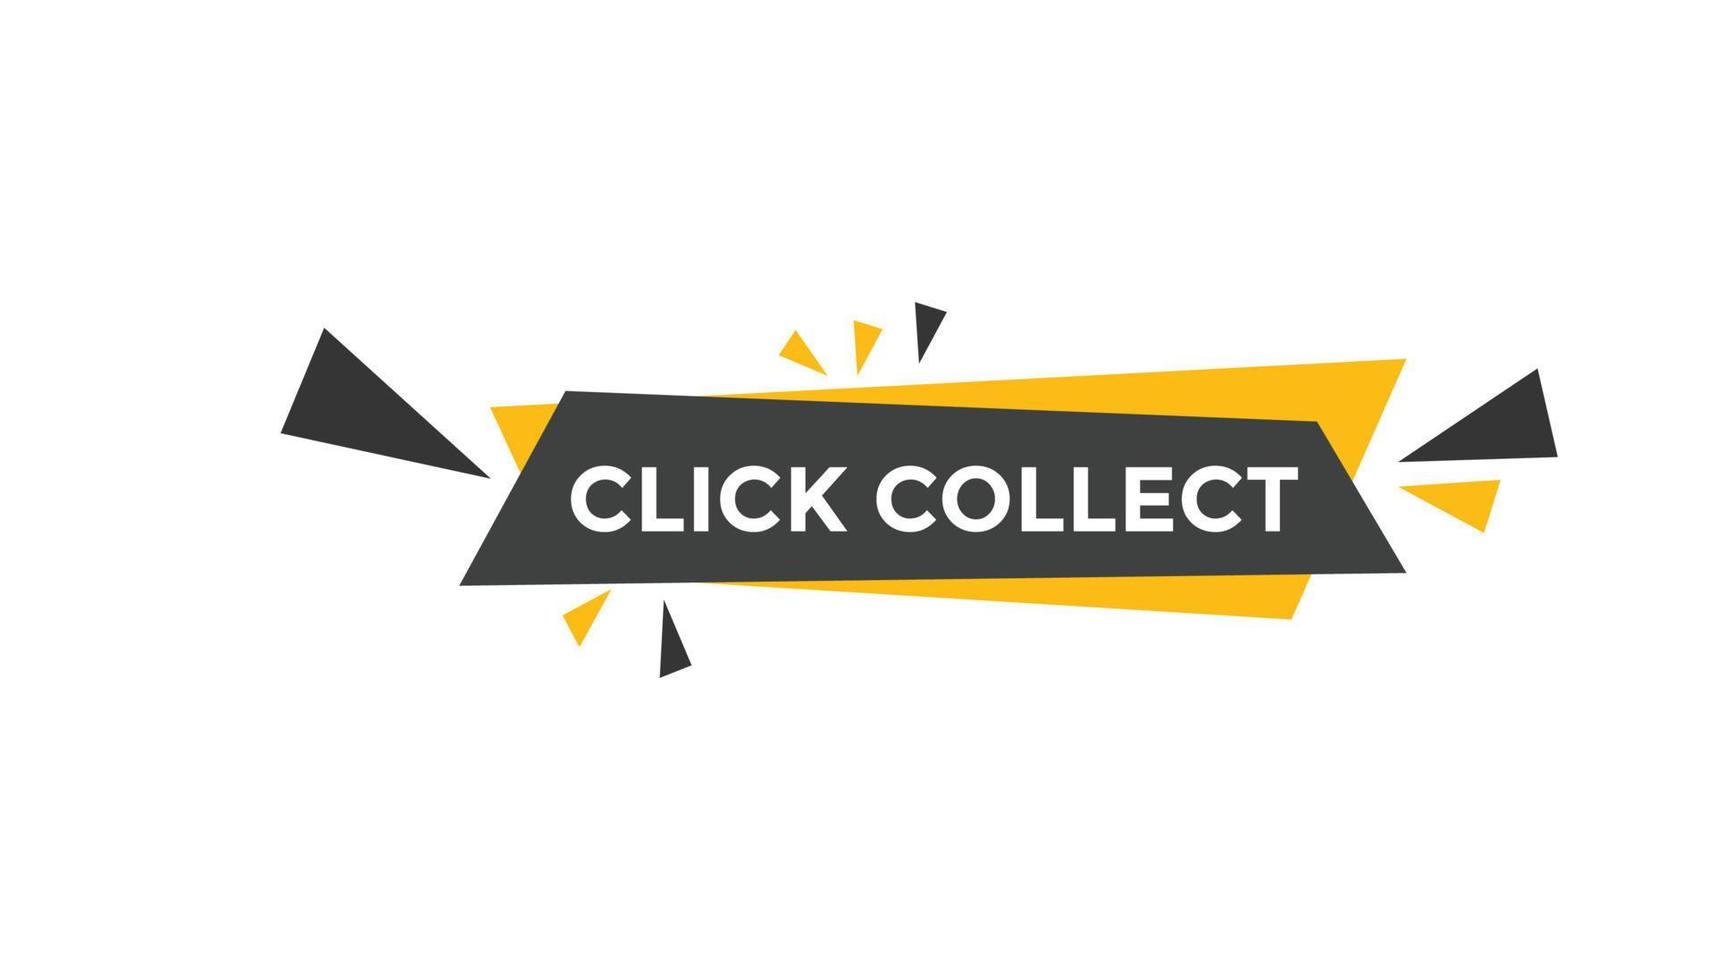 Click collect  button web banner templates. Vector Illustration